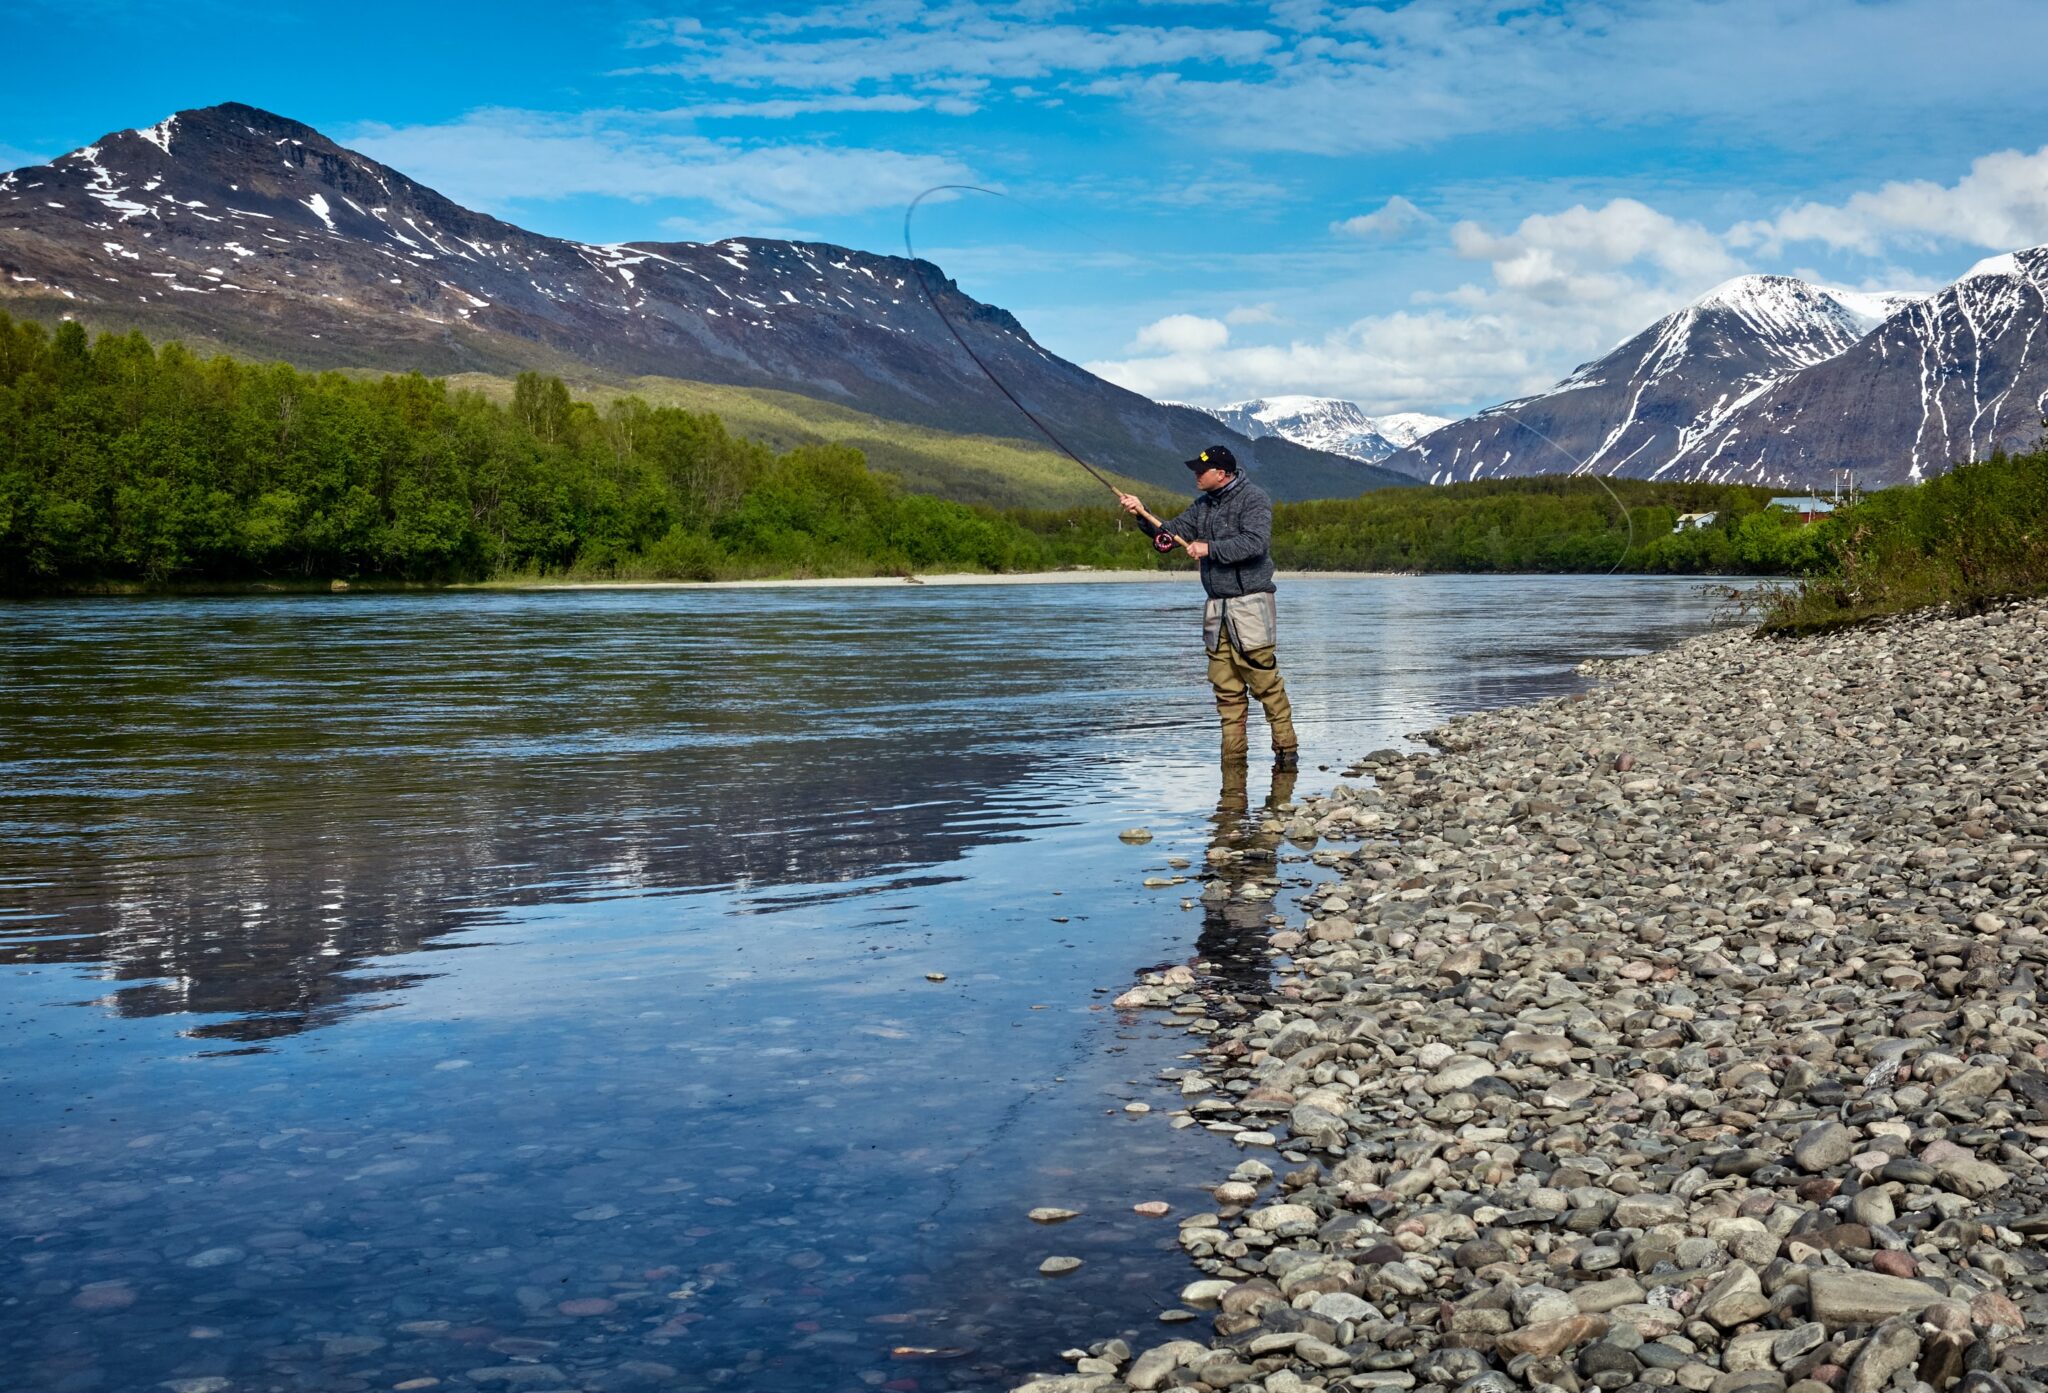 Man fishing on a river